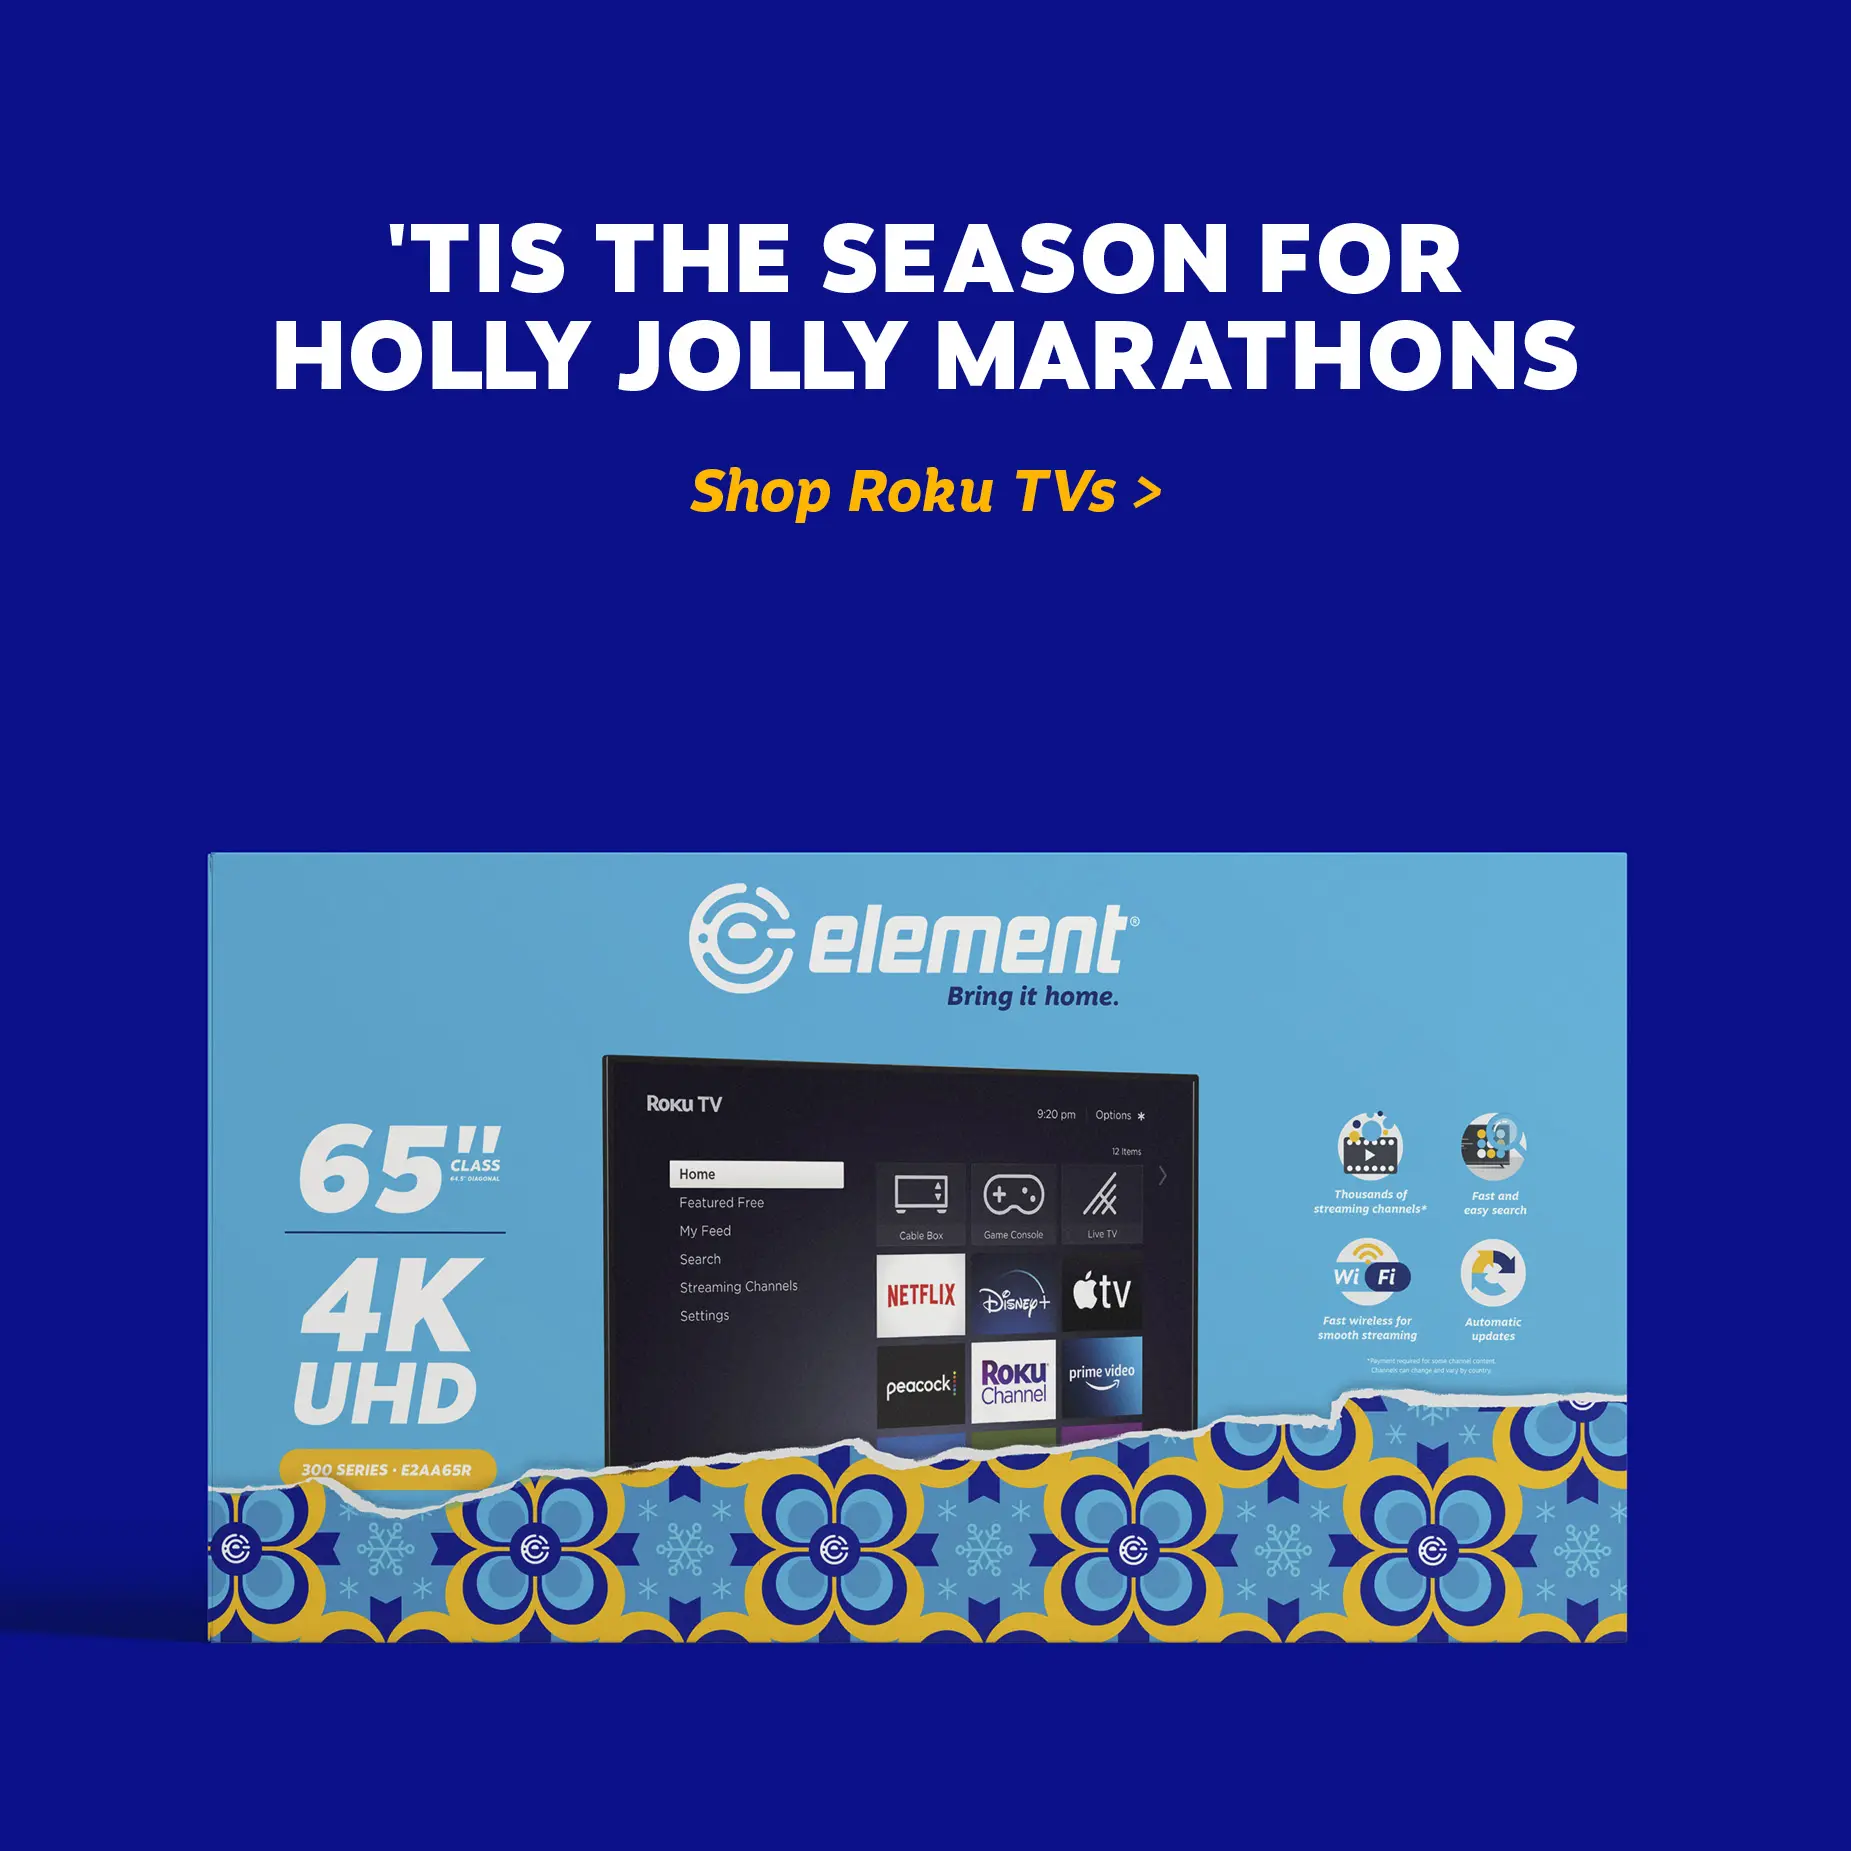 'Tis the season for holly jolly marathons